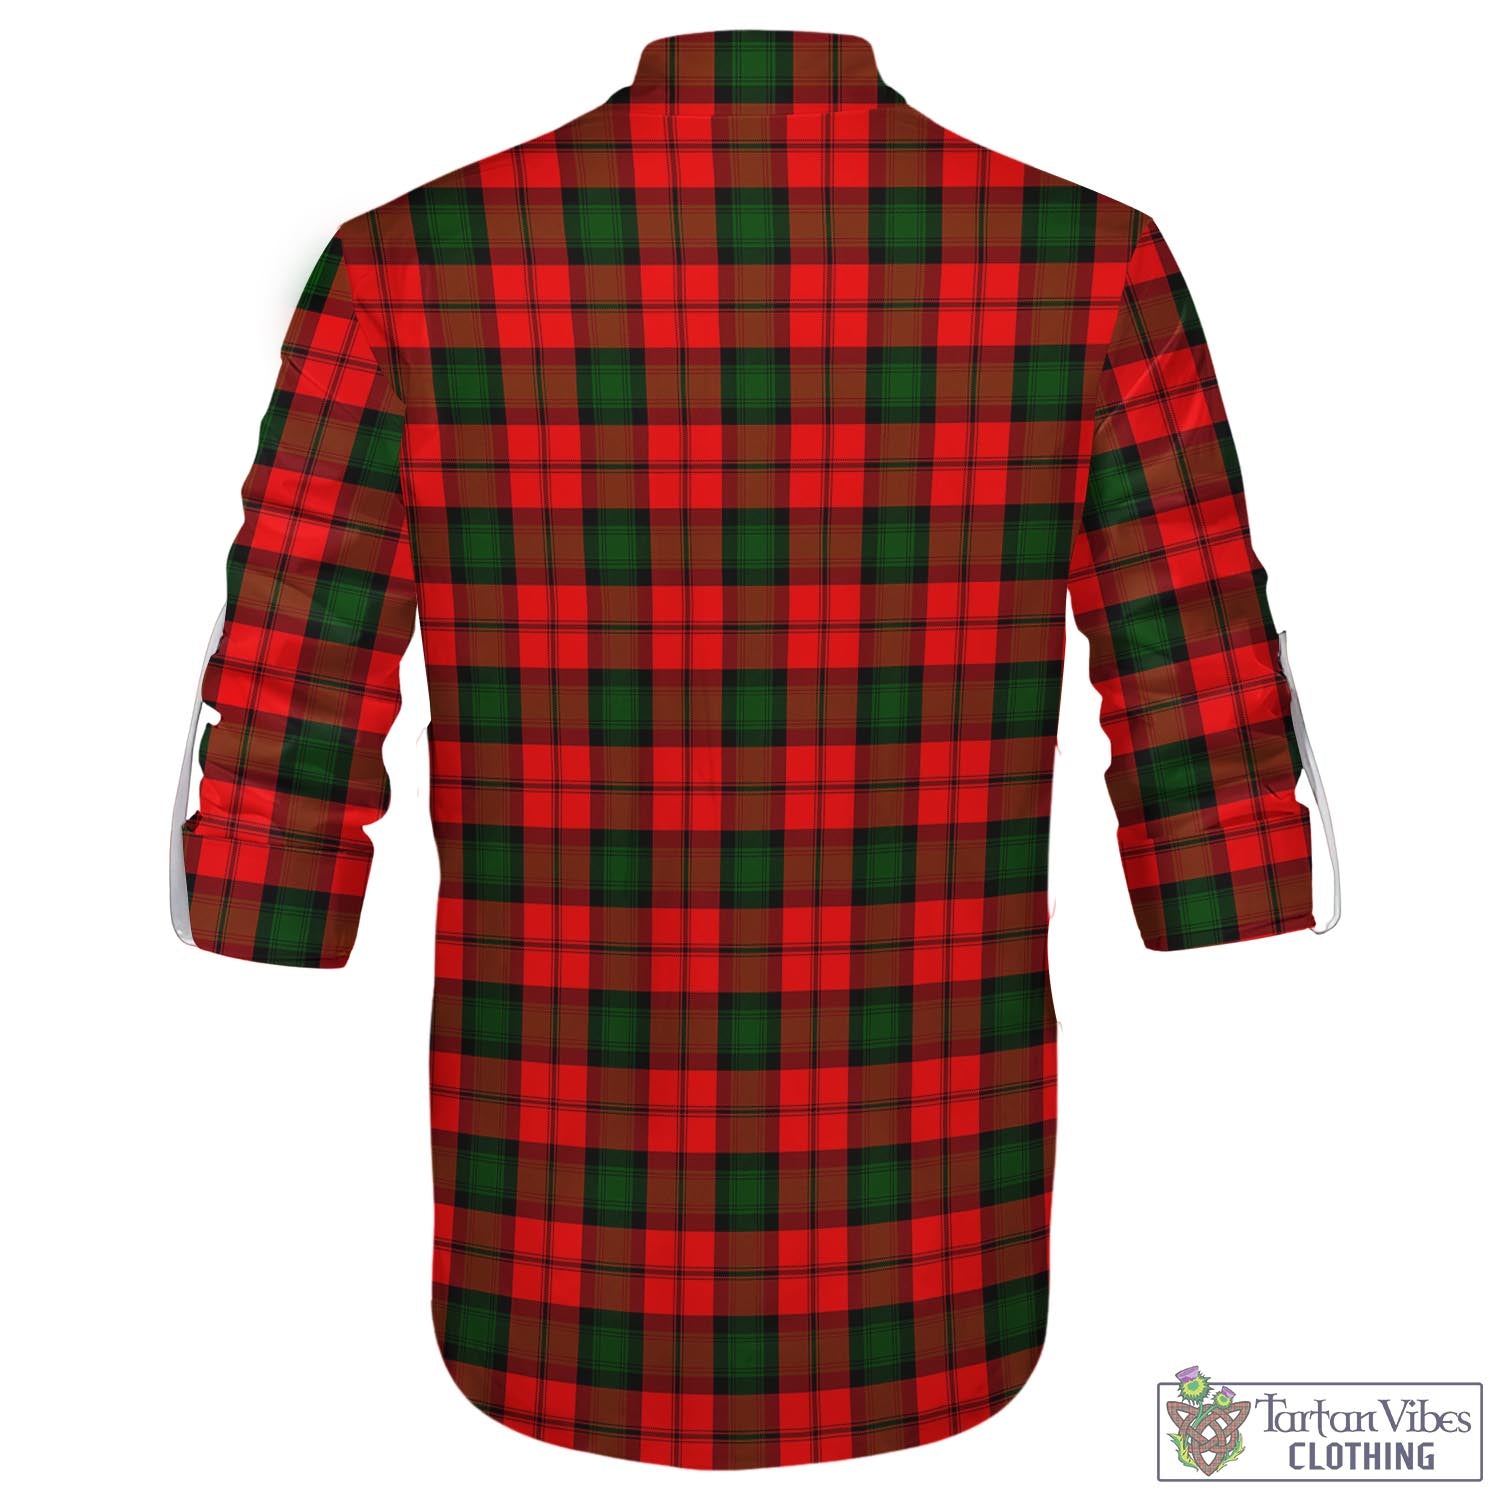 Tartan Vibes Clothing Kerr Modern Tartan Men's Scottish Traditional Jacobite Ghillie Kilt Shirt with Family Crest